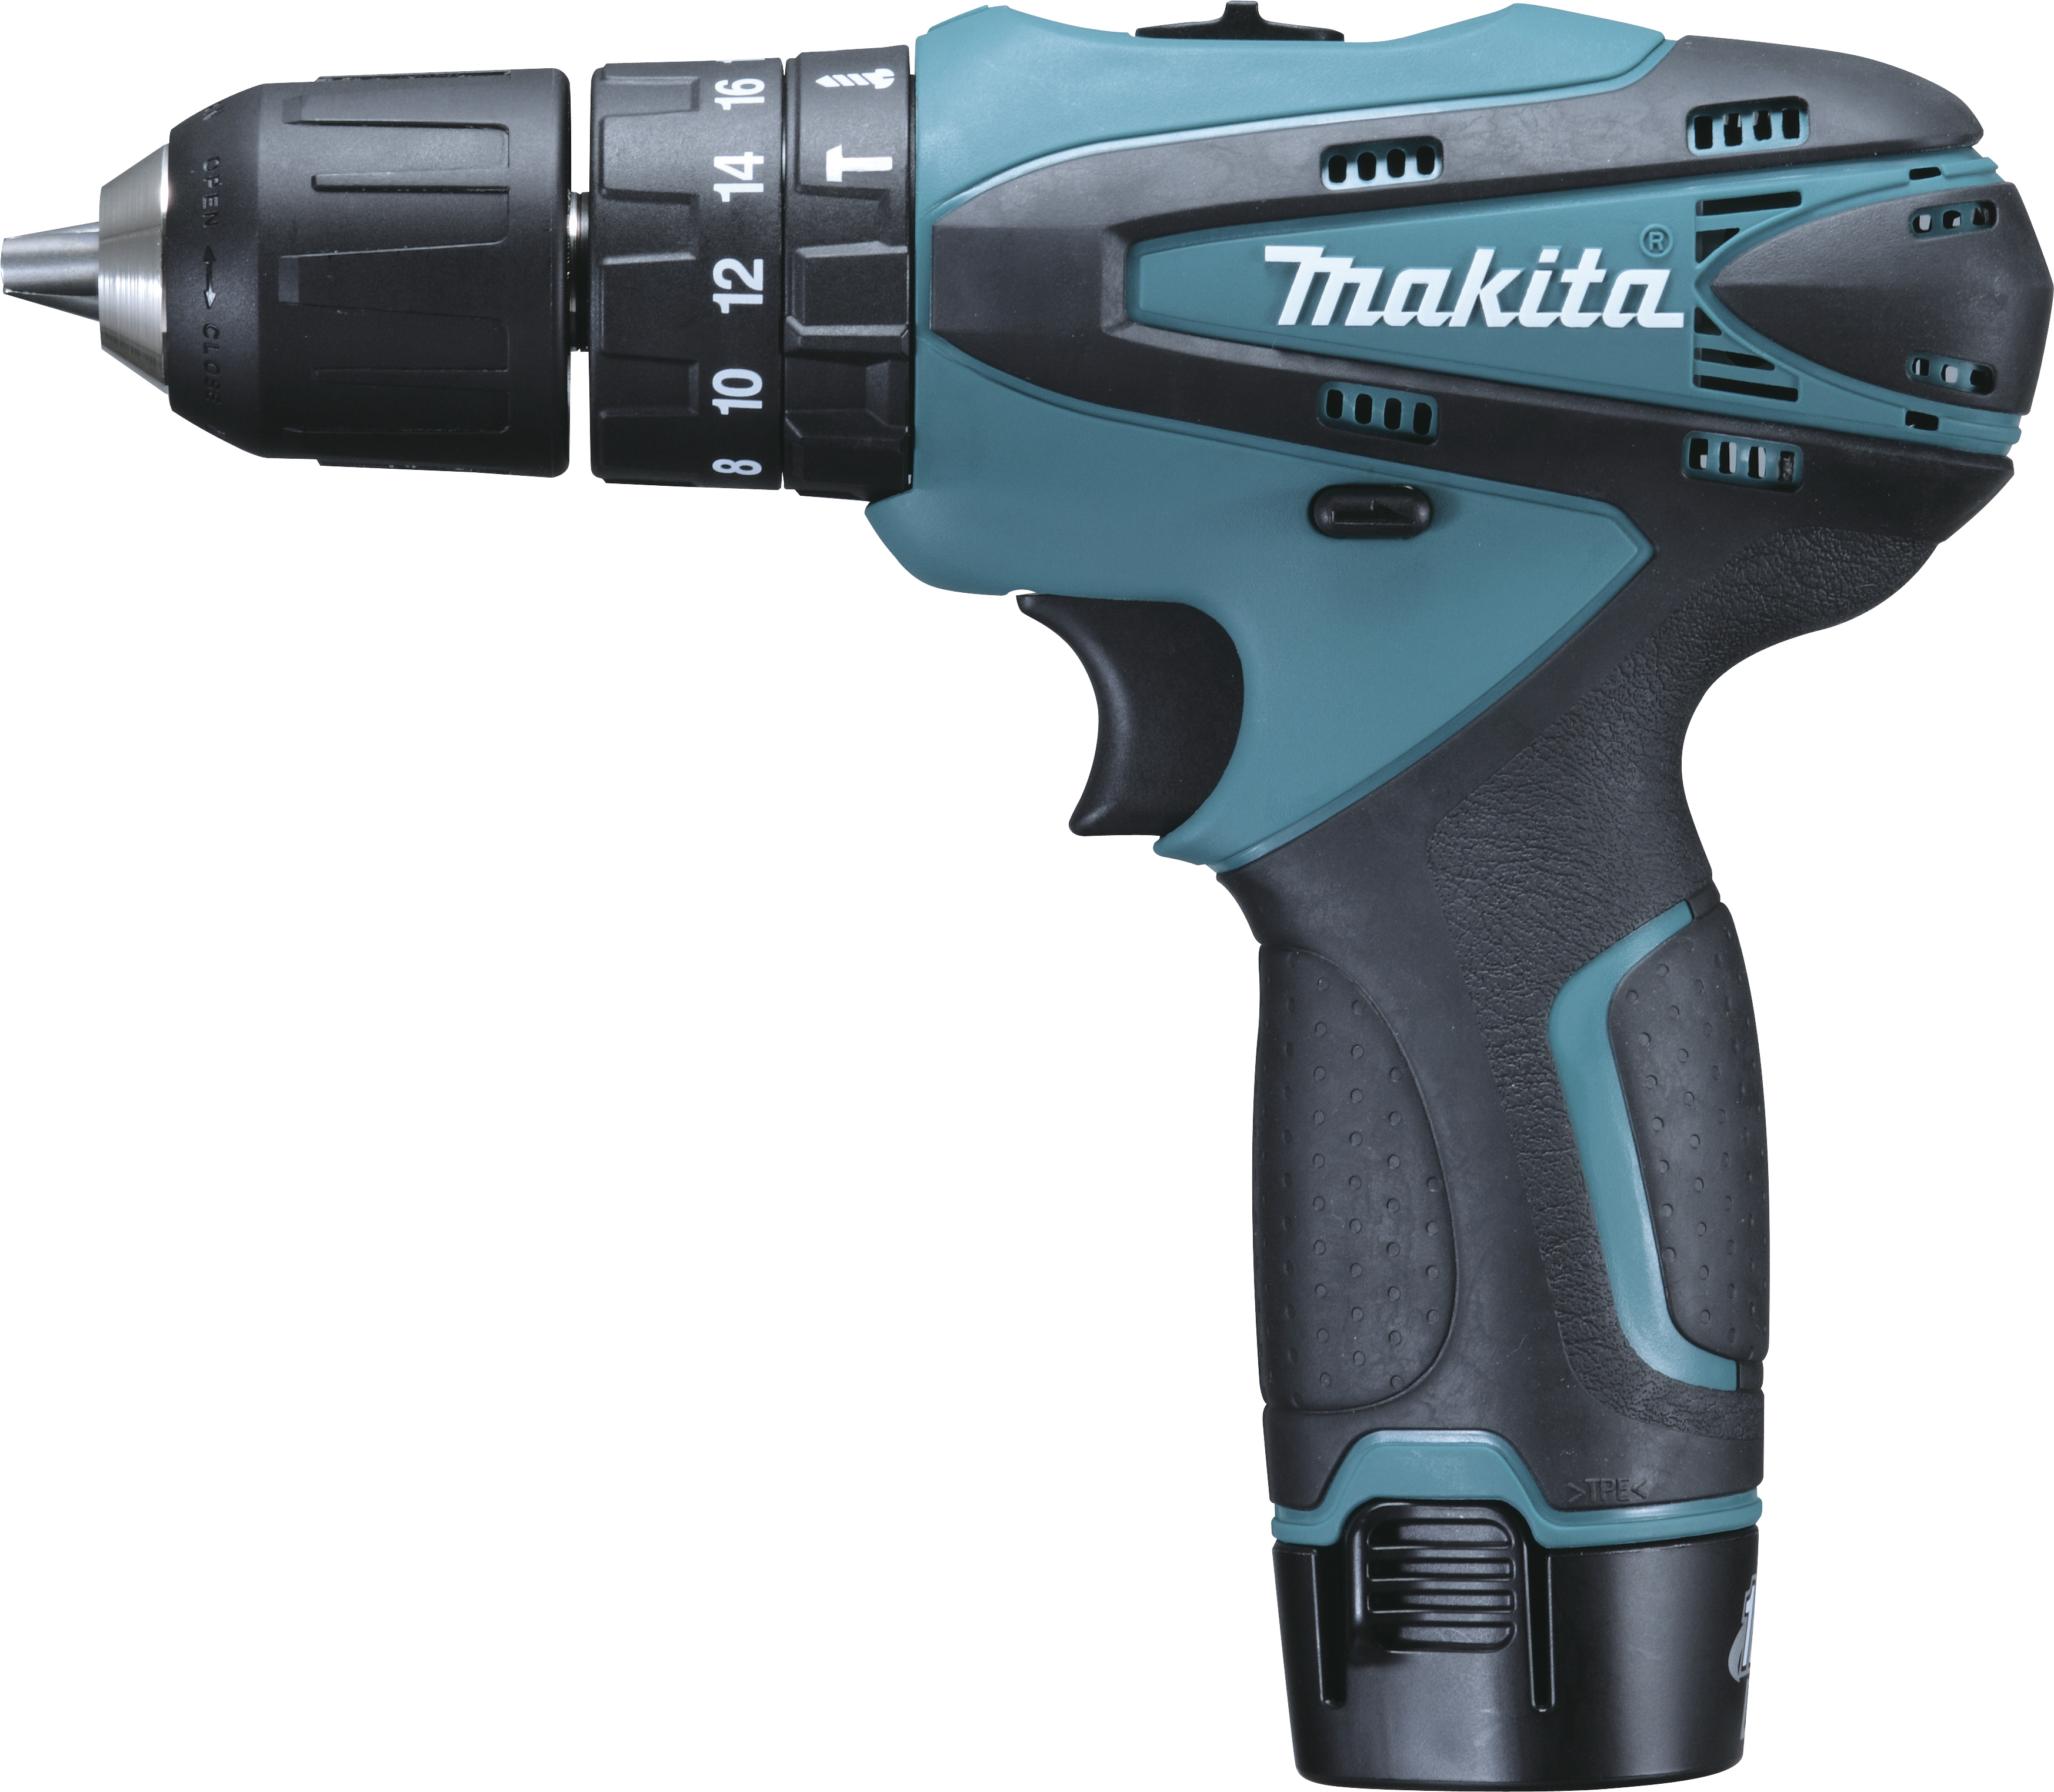 Makita Power Tools South Africa - 10.8V Cordless Impact Driver Drill